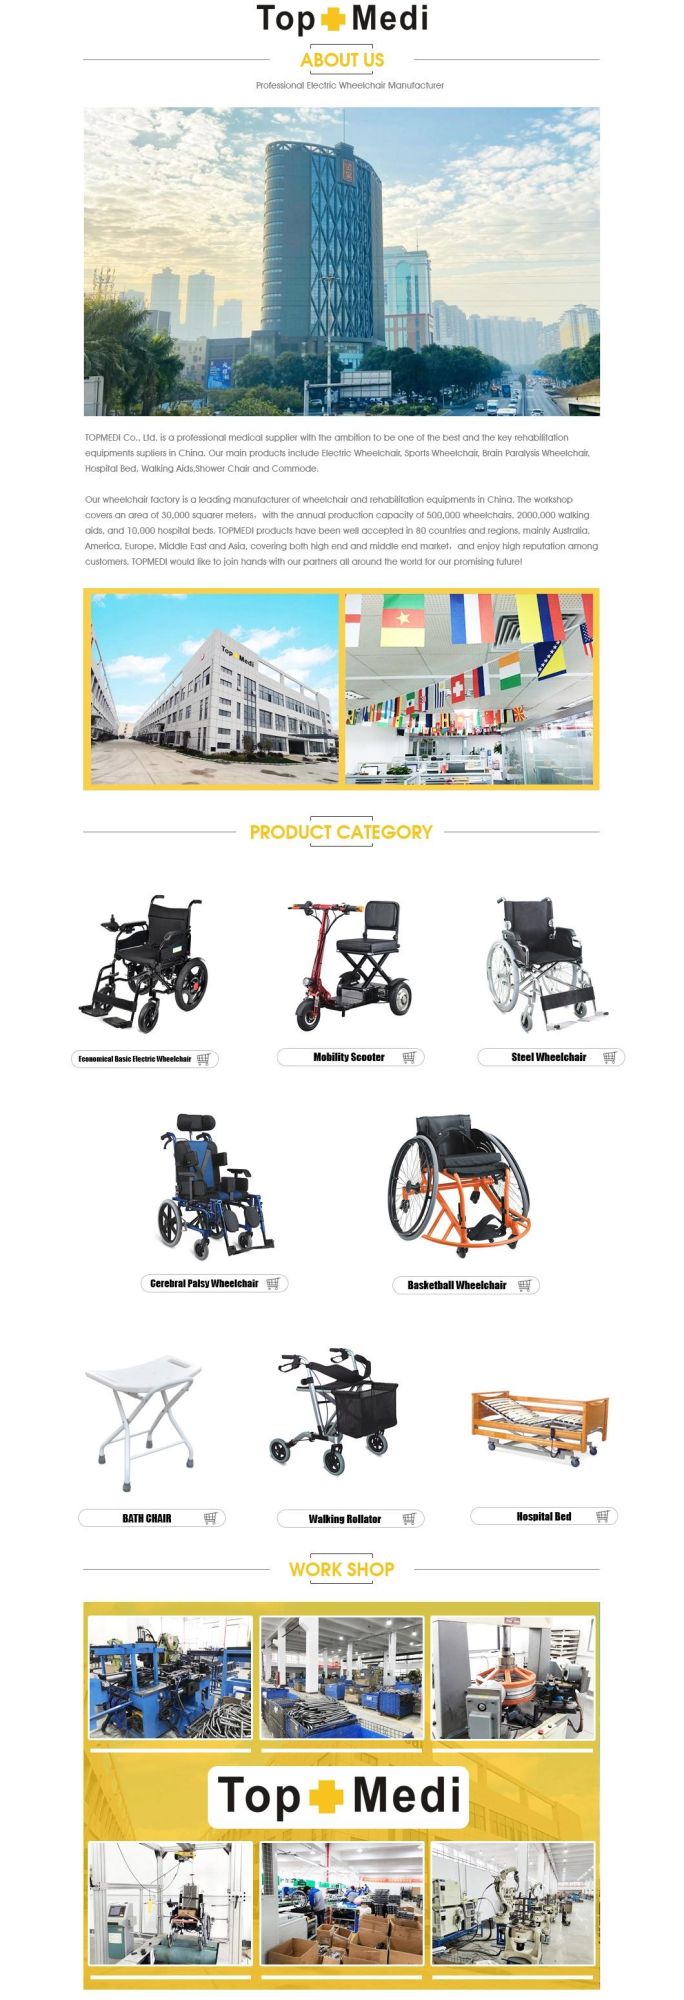 Pediatric Electric Power Wheelchair